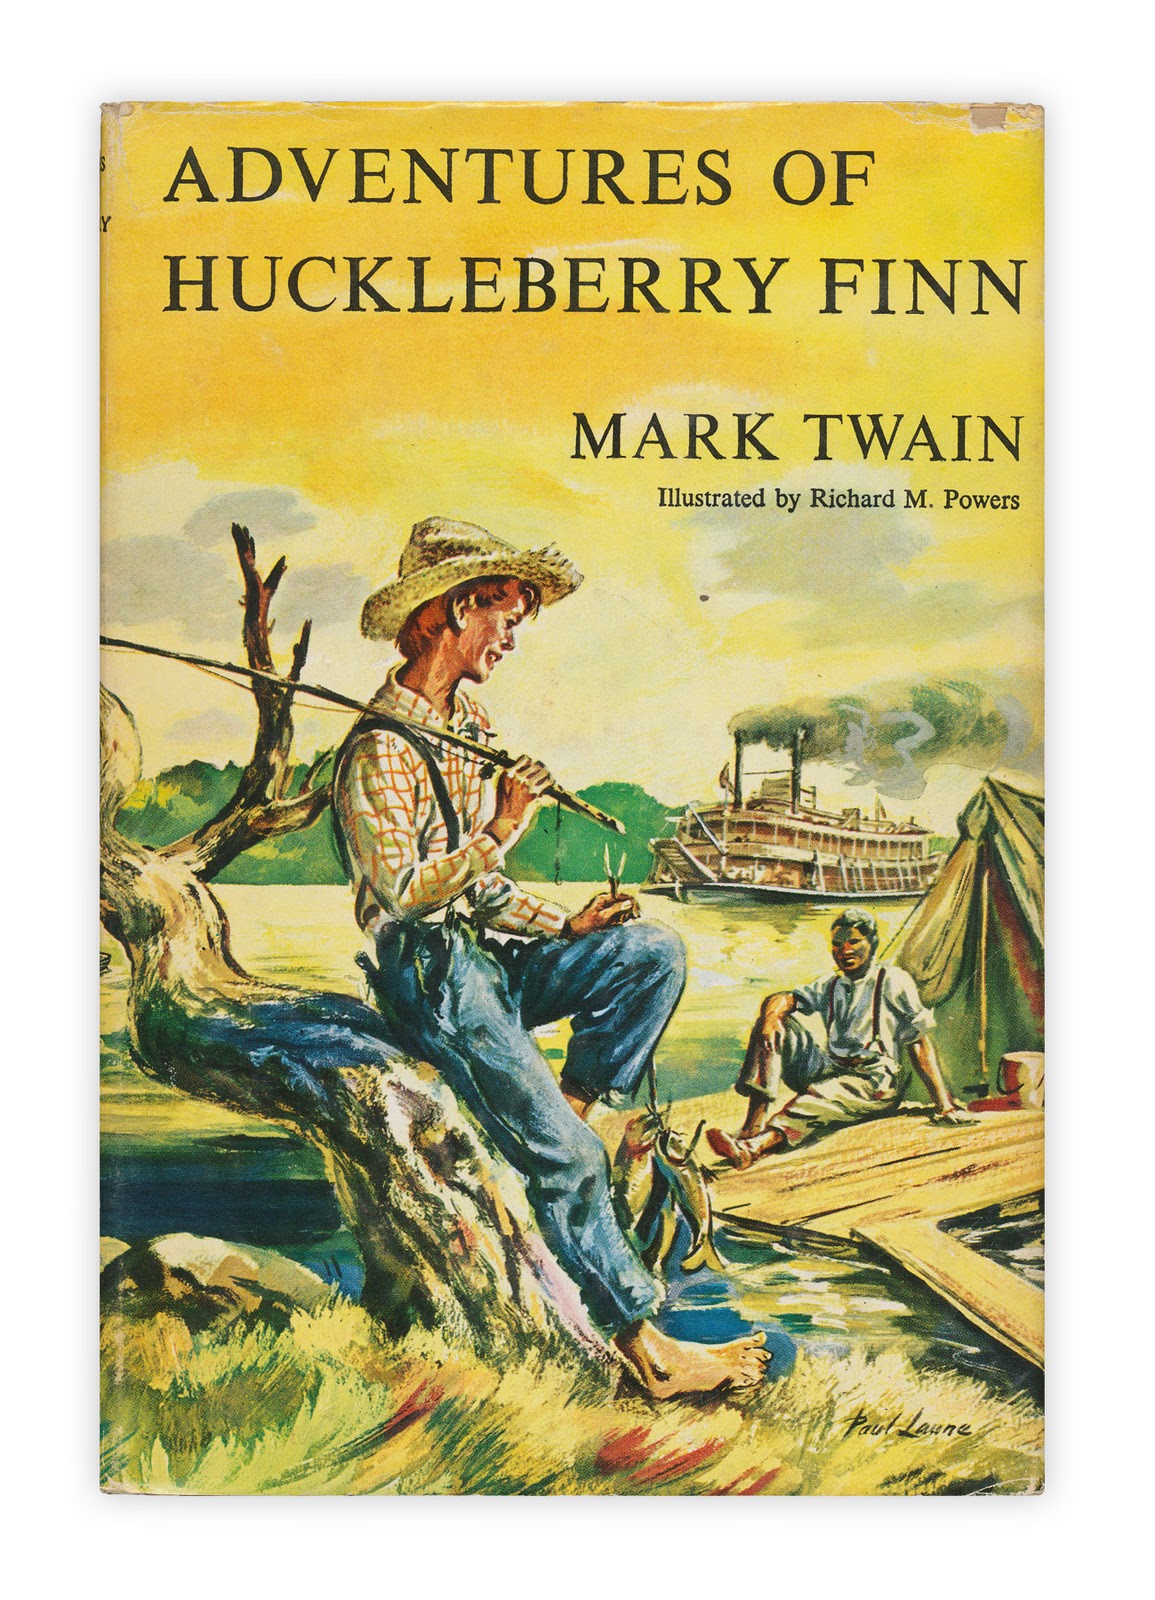 Adventures of huckleberry finn essay questions